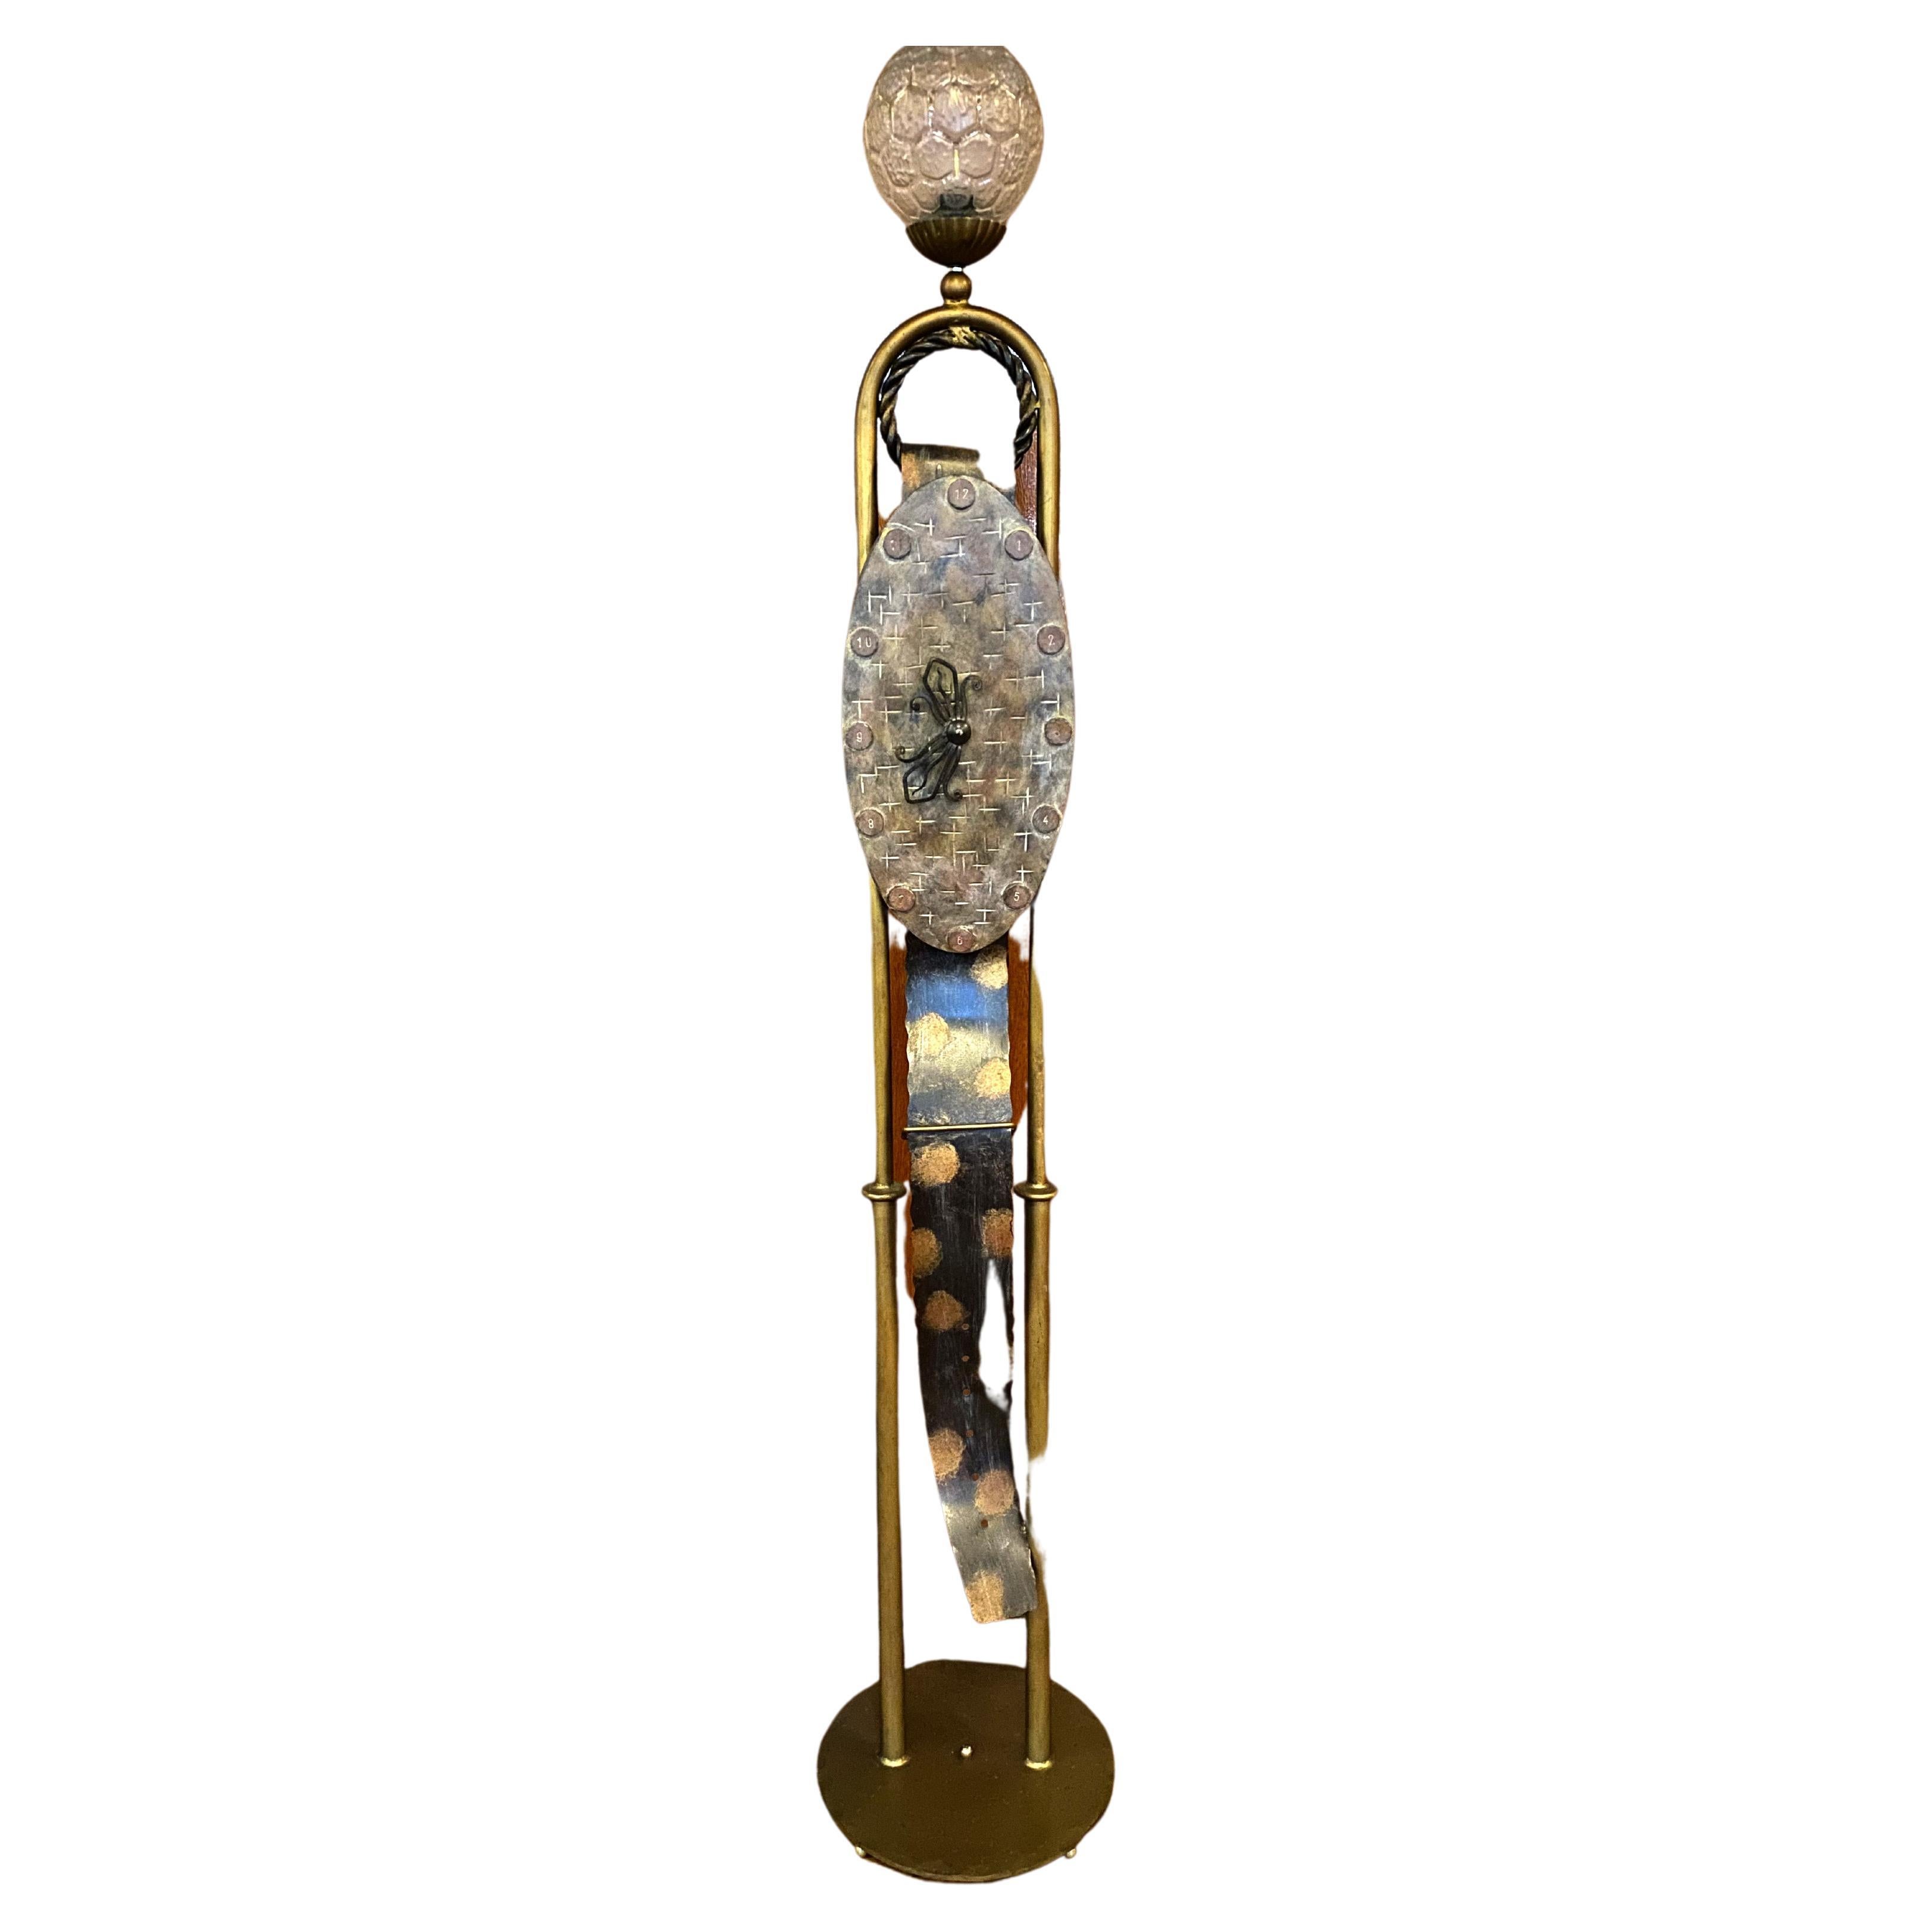 20th Century Floor Lamp with a Decorative Clock 'Surrounding Salvador Dali'